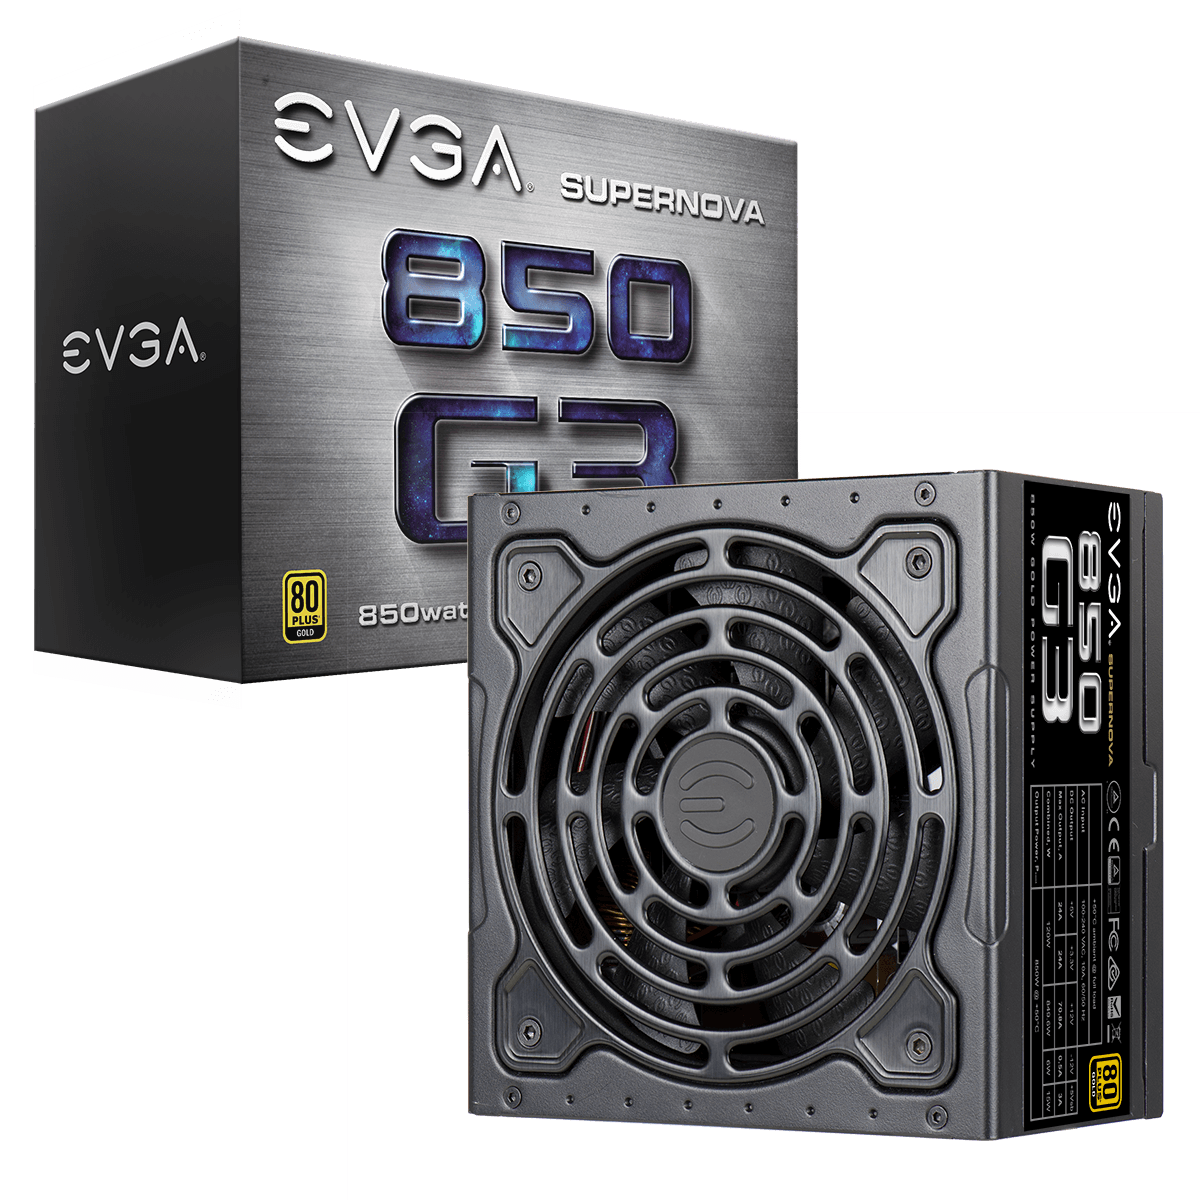 EVGA - Products - EVGA SuperNOVA 850 G+, 80 Plus Gold 850W, Fully Modular,  FDB Fan, 10 Year Warranty, Includes Power ON Self Tester, Power Supply  120-GP-0850-X1 - 120-GP-0850-X1